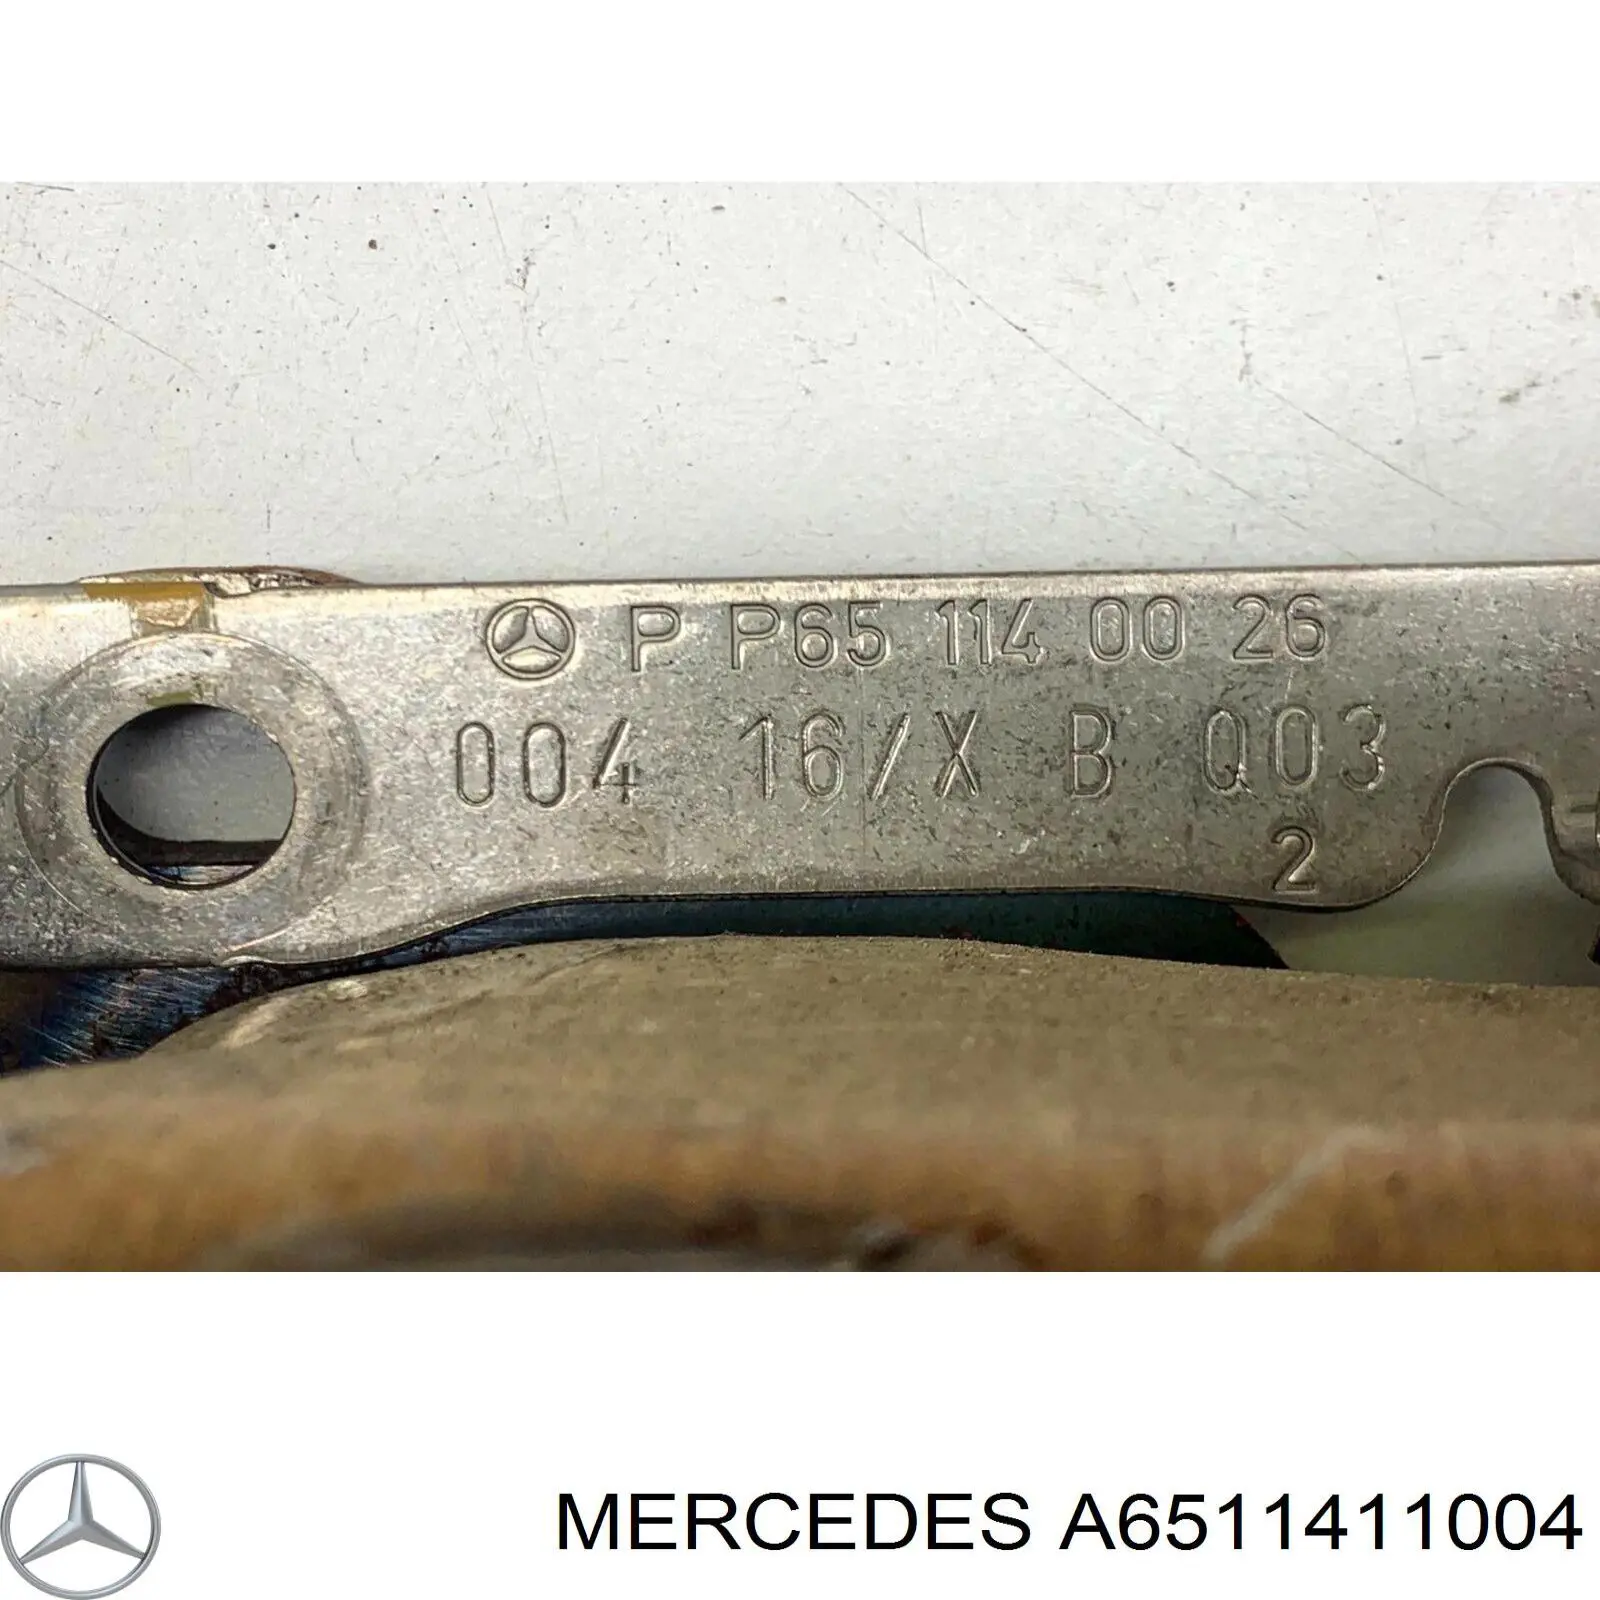 A6511411004 Mercedes